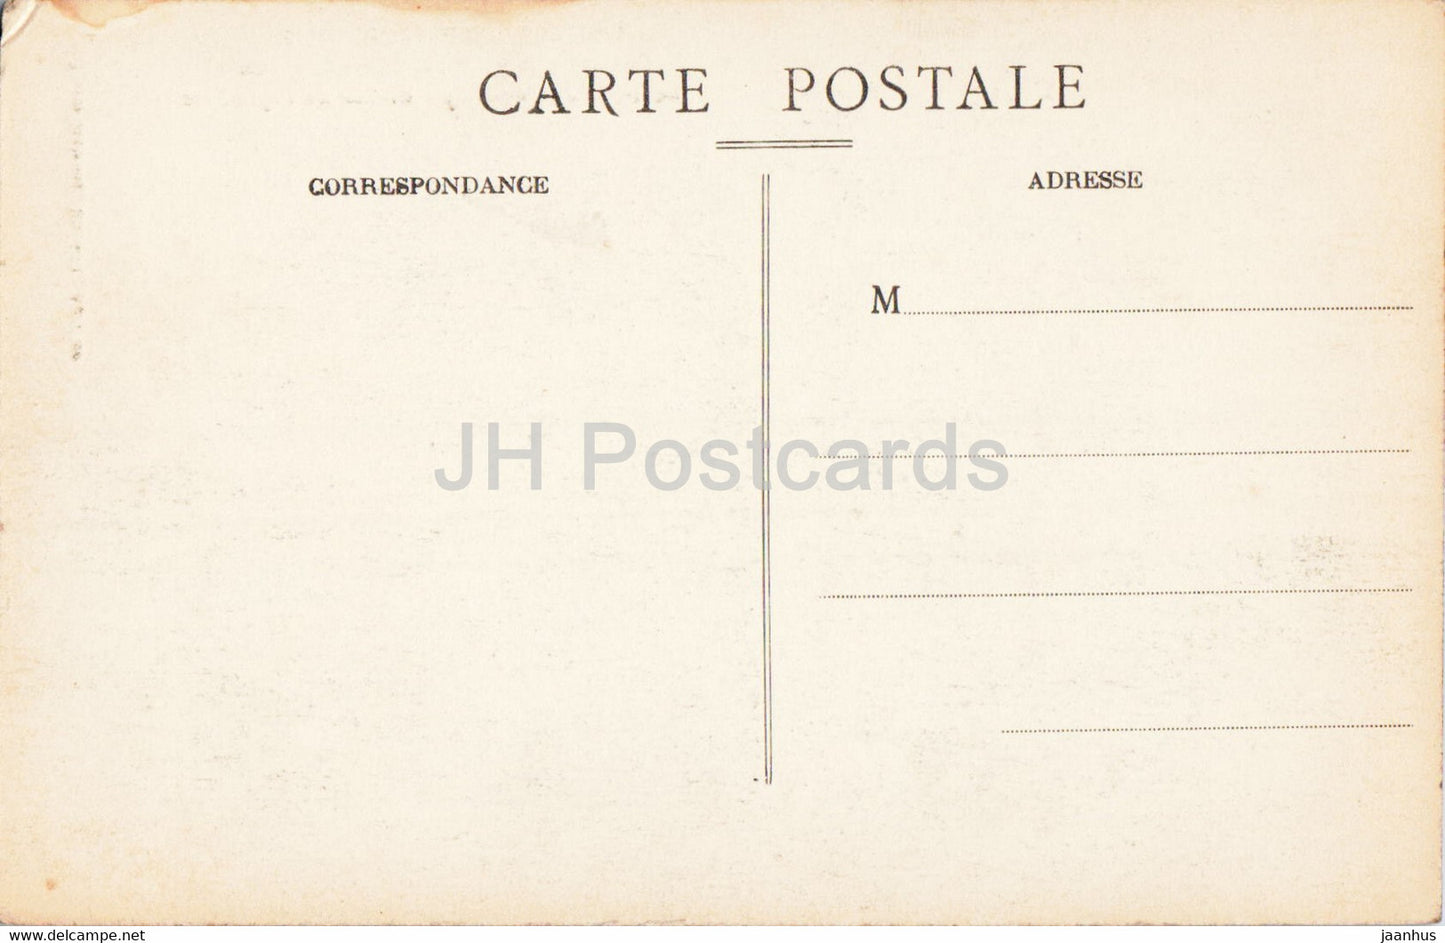 Nos Montagnes - Environs du Puy Mary - Rocher de Peyre Arse - 1854 - old postcard - France - unused